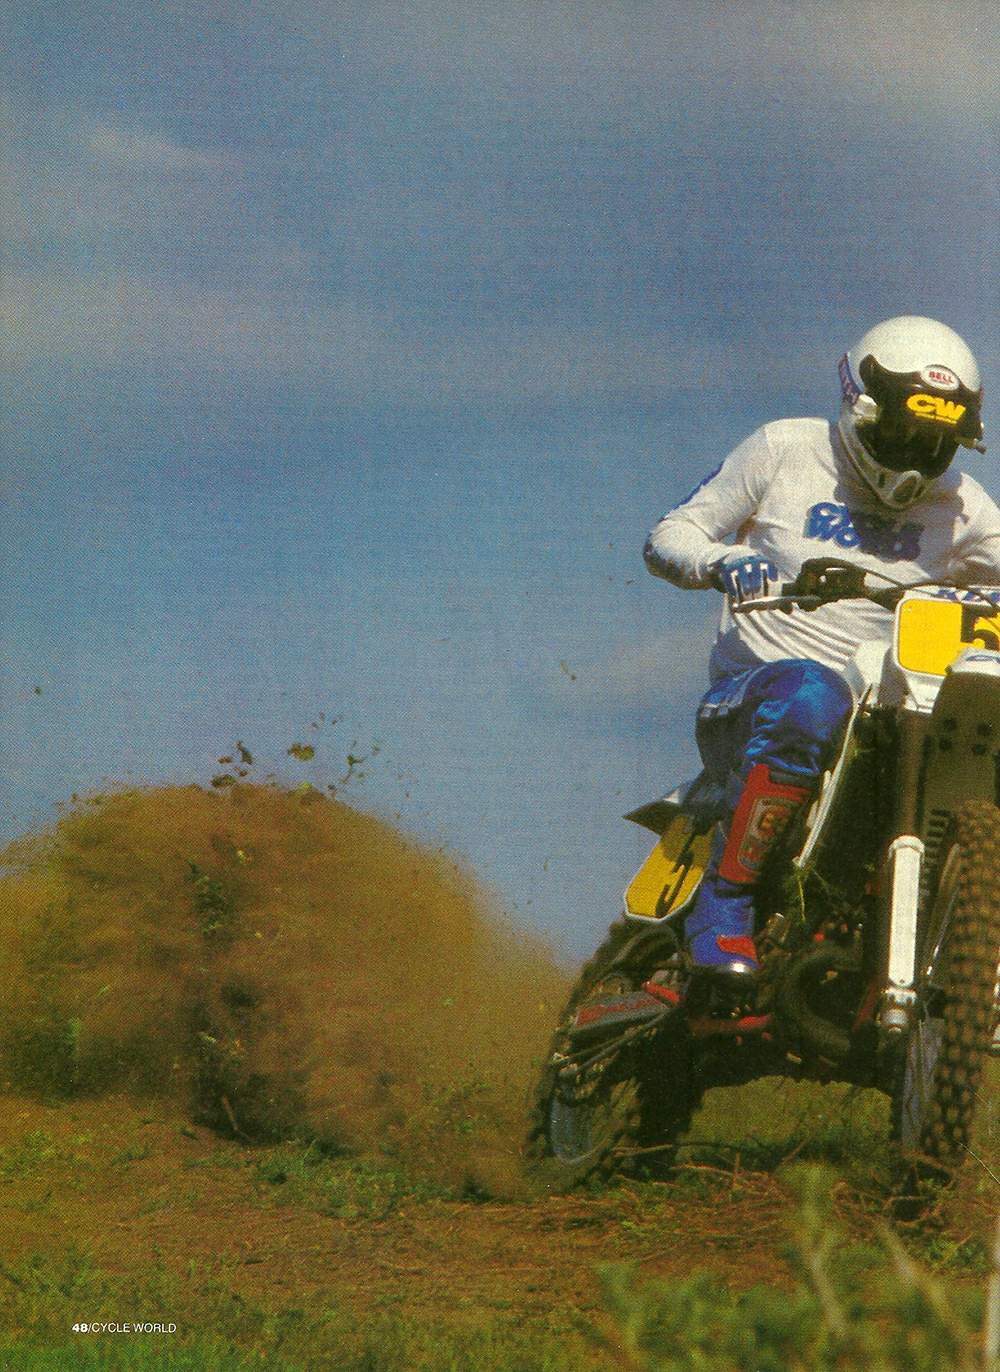 , 1985 KTM 500 MXC